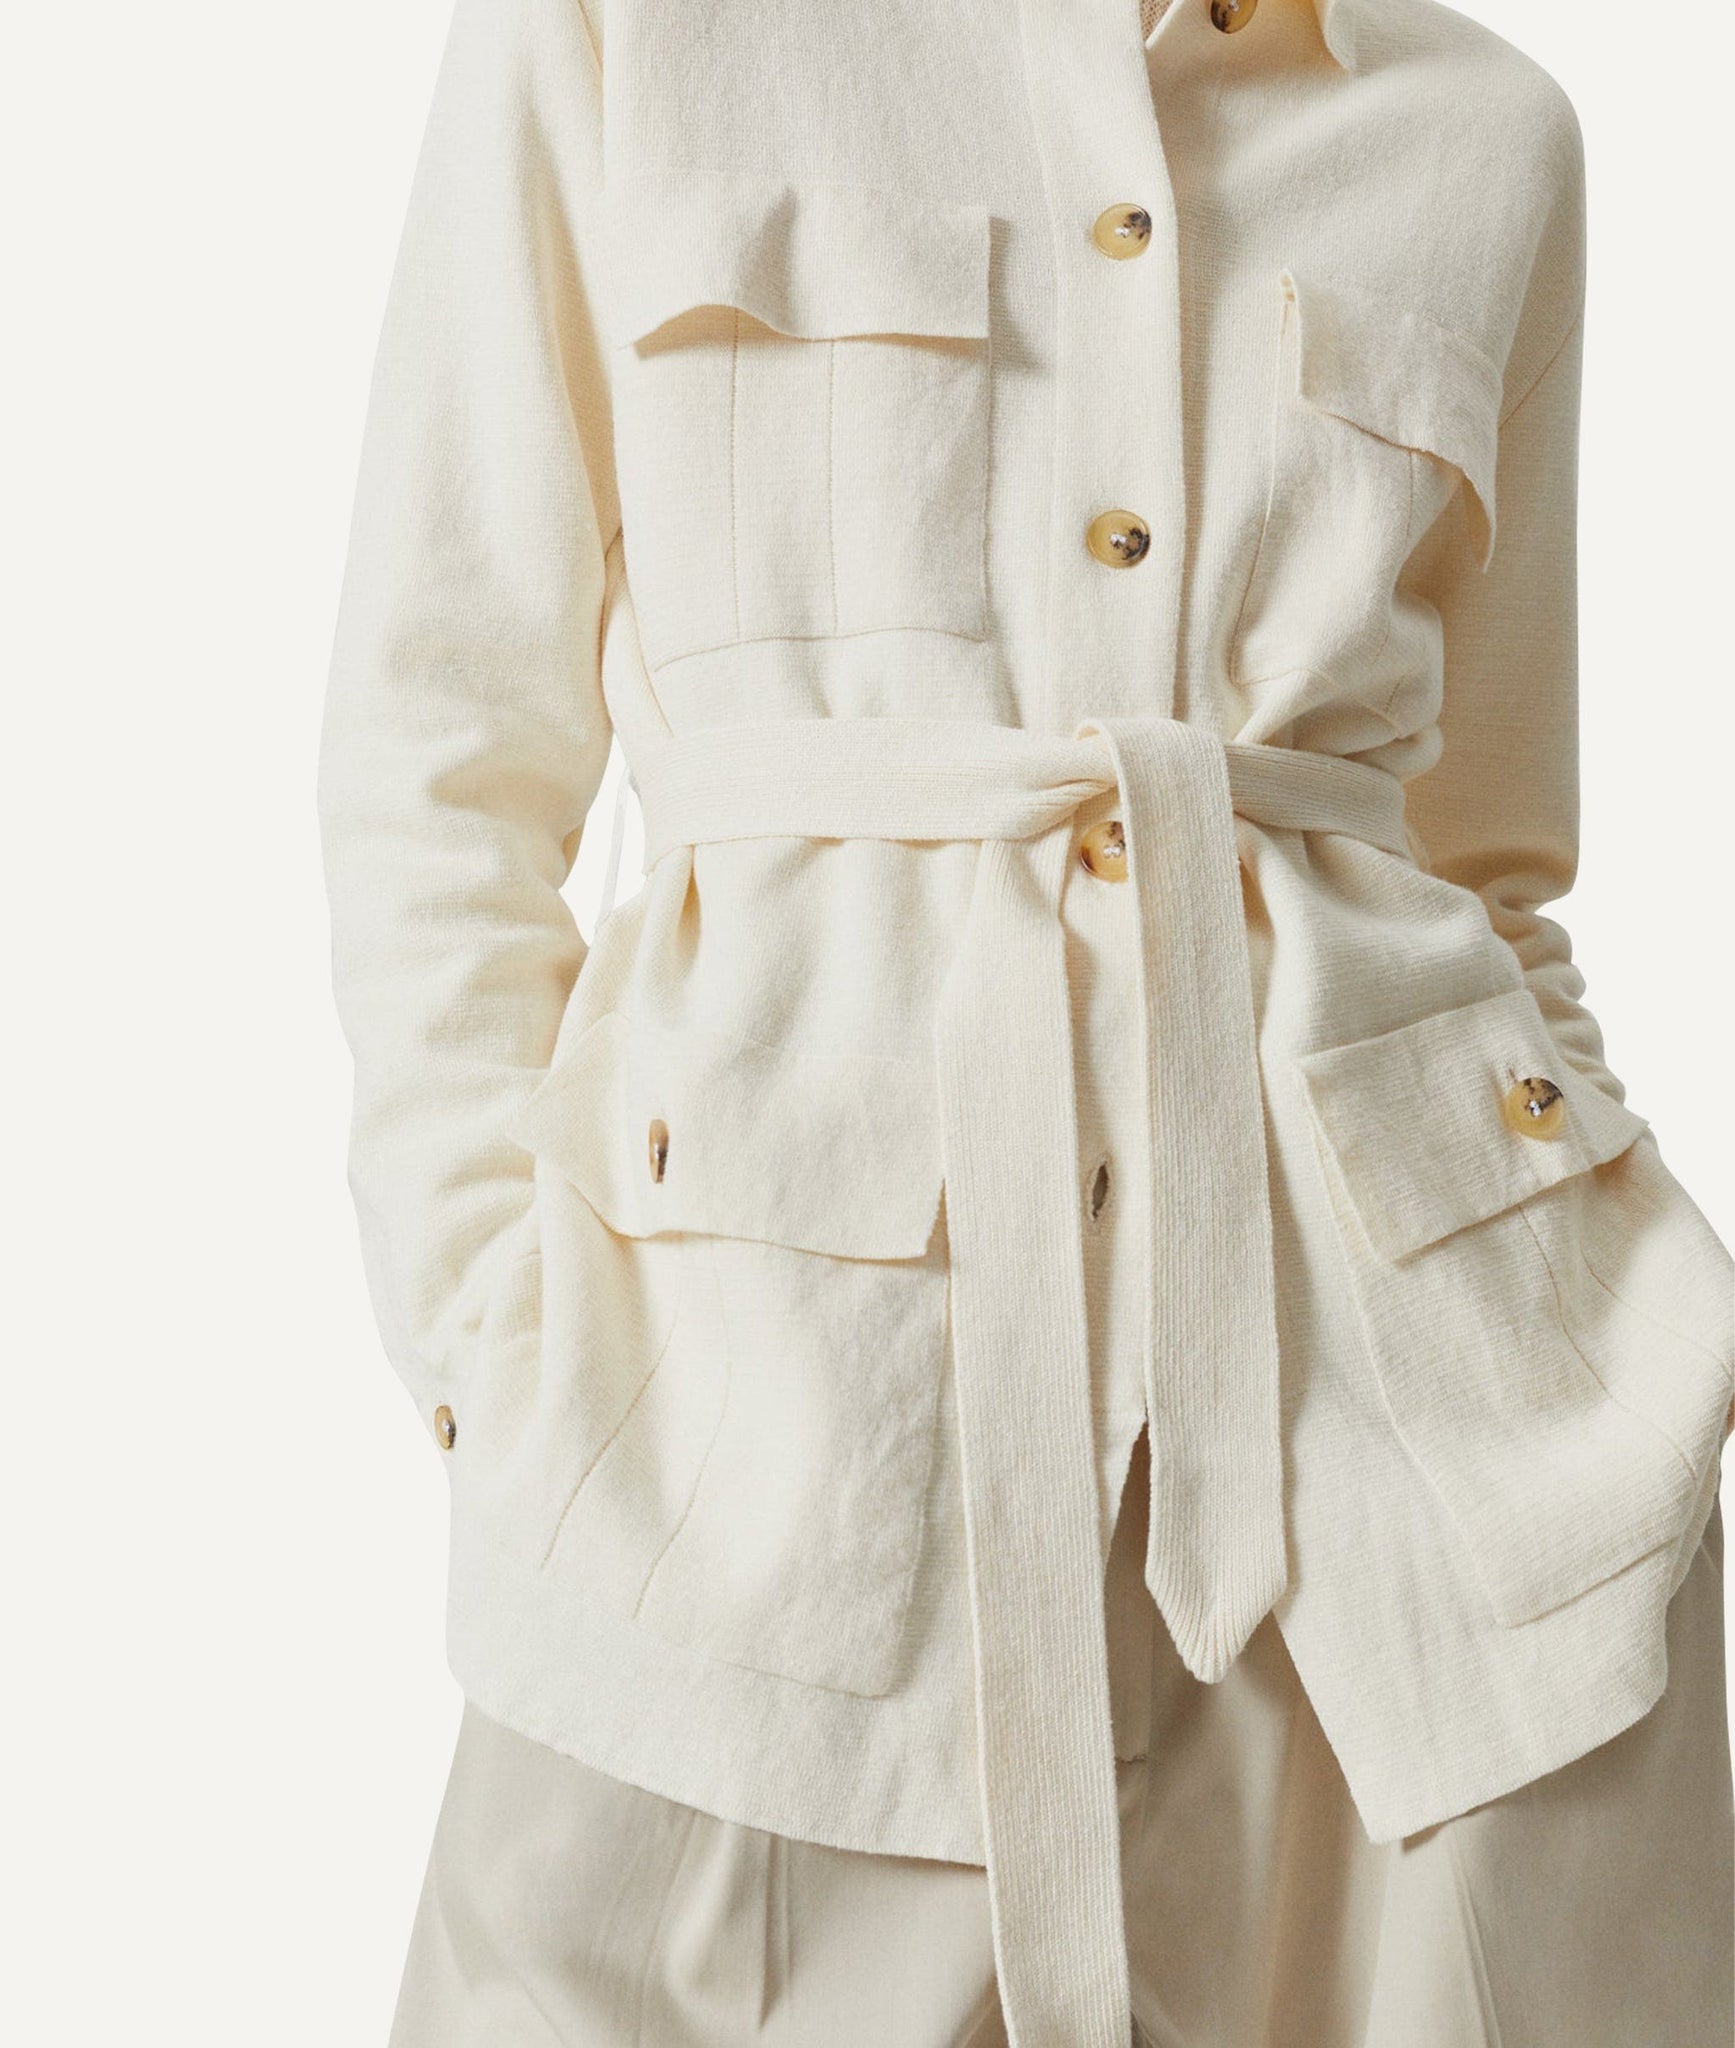 The Linen Cotton Sahariana Jacket